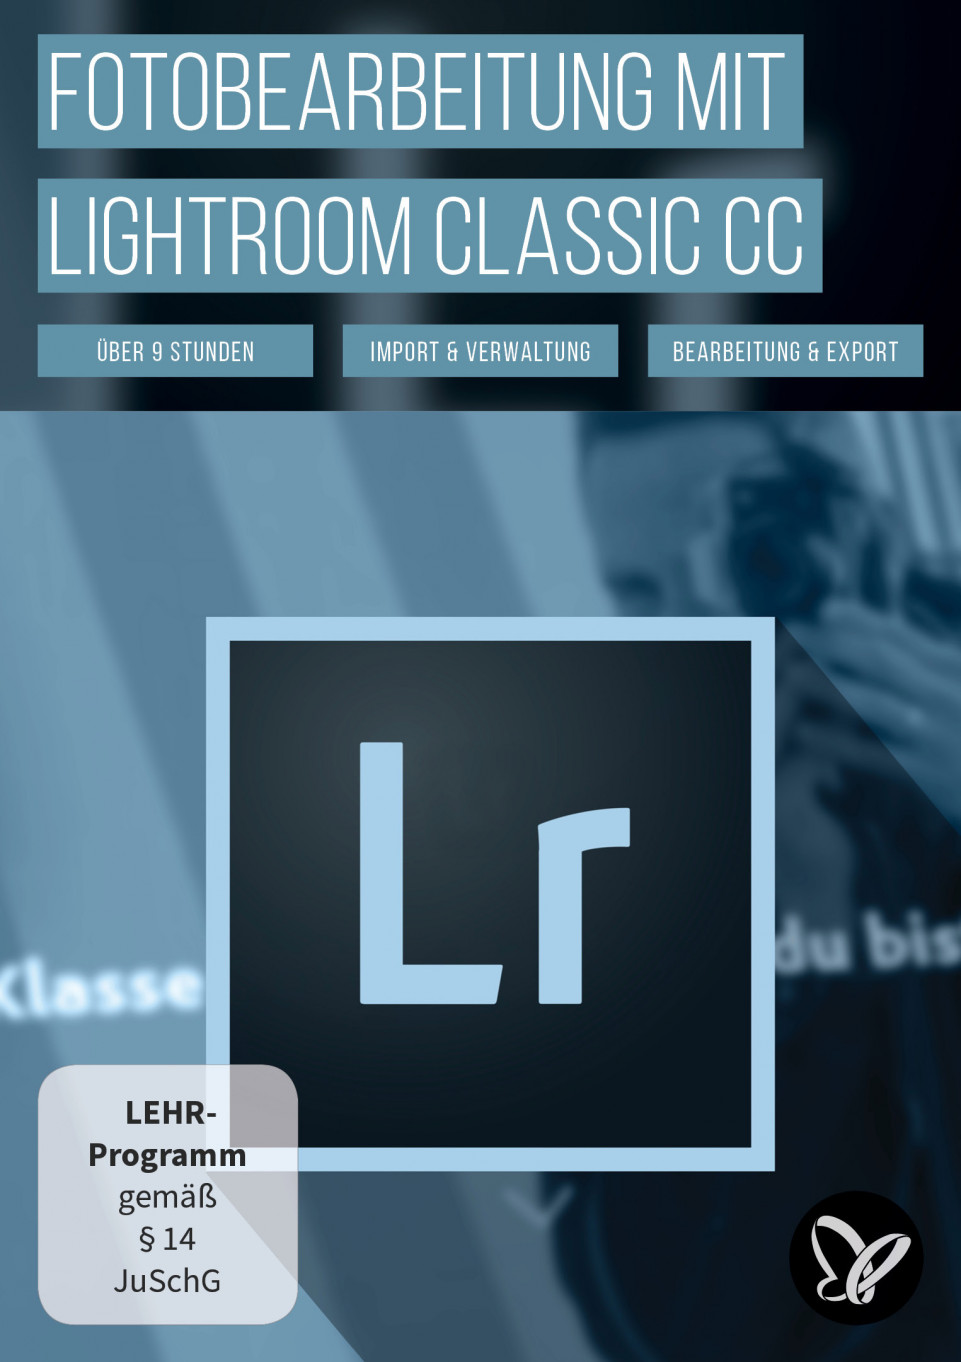 Lightroom Classic CC – das große Tutorial zur Fotobearbeitung